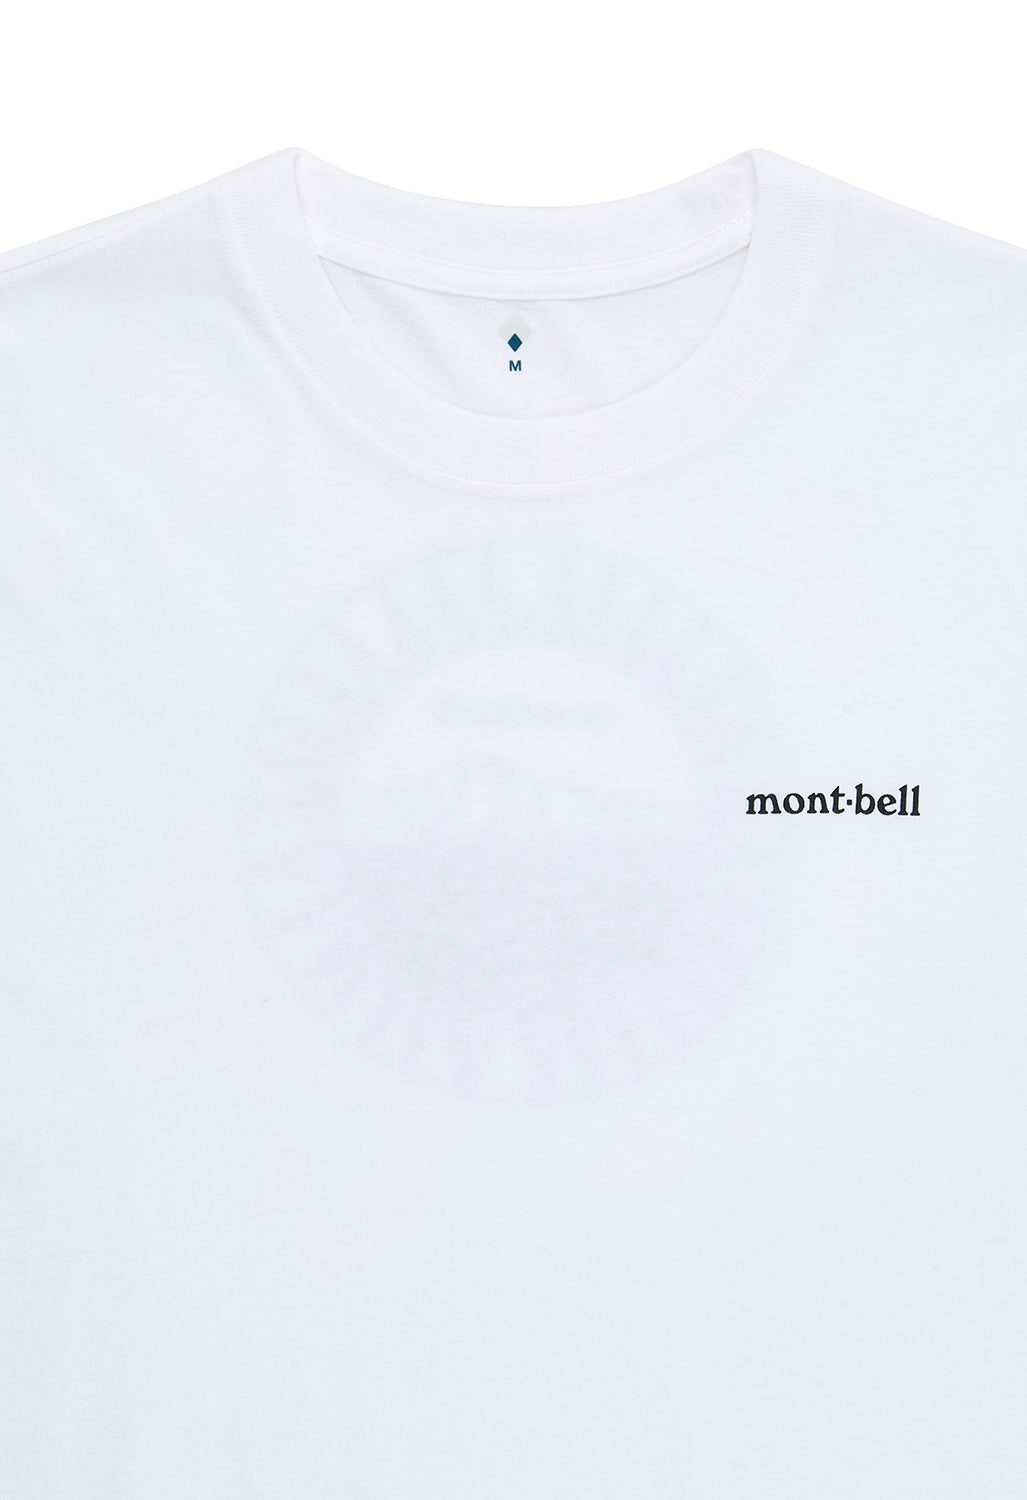 Montbell Pear Skin Cotton Shimayama T-Shirt - White